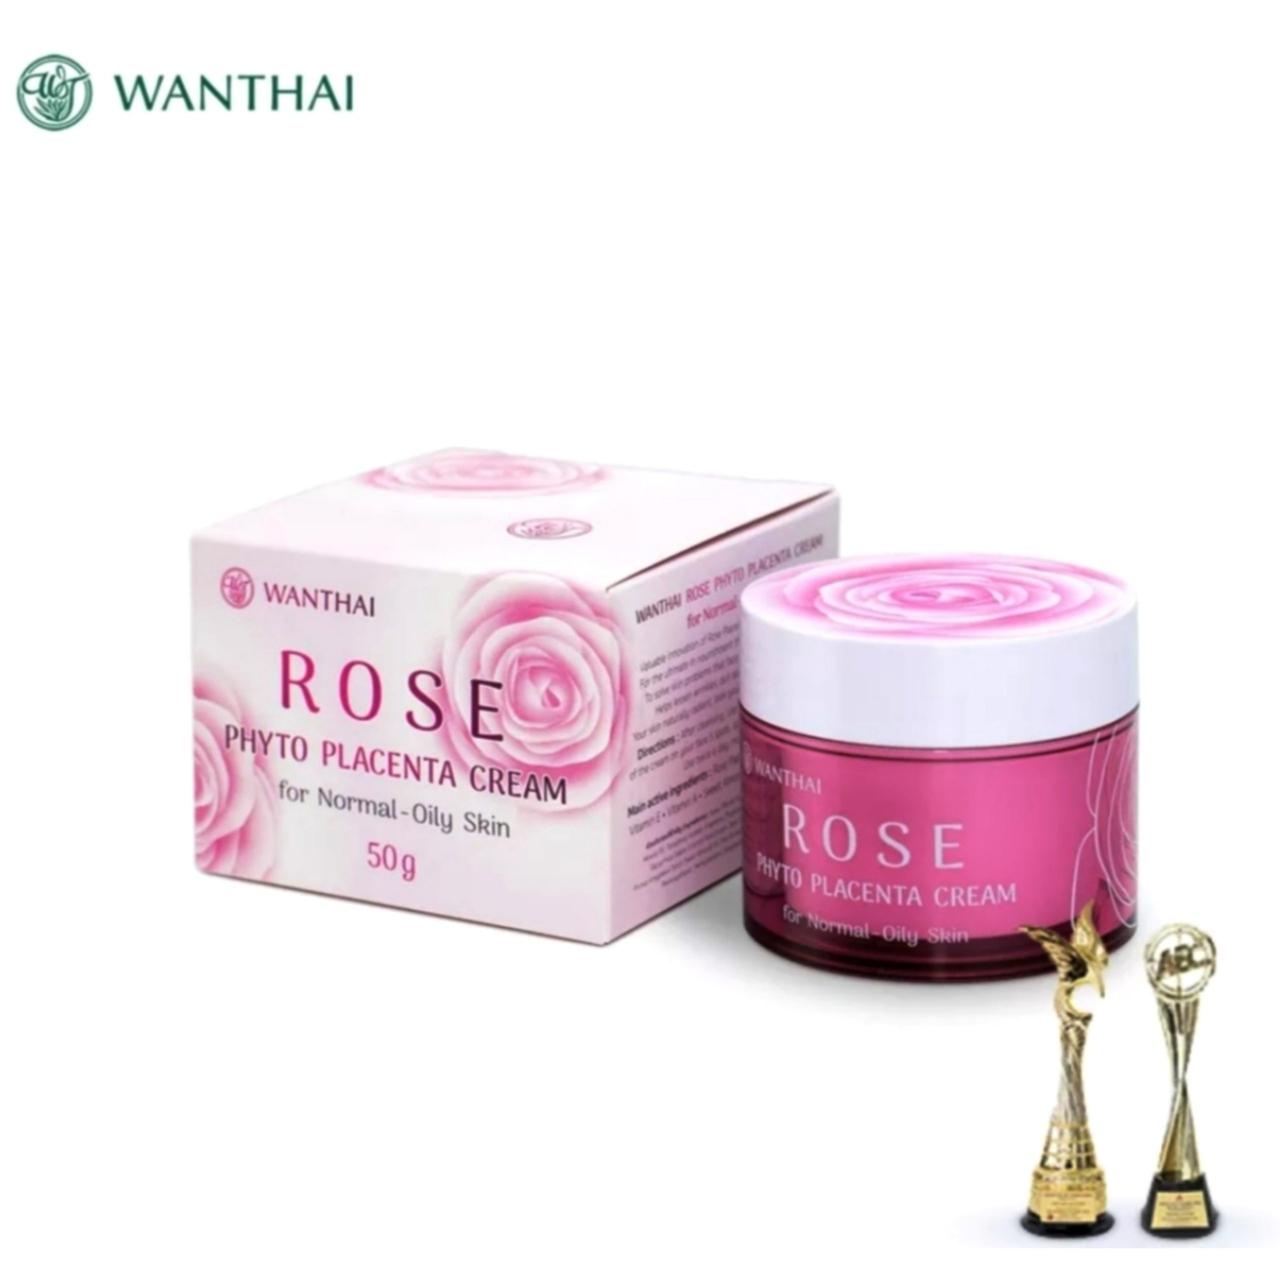 Крем с экстрактом фитоплаценты Wanthai Rose Phyto Placenta Cream For Normal-Oily Skin, 15 мл. Таиланд